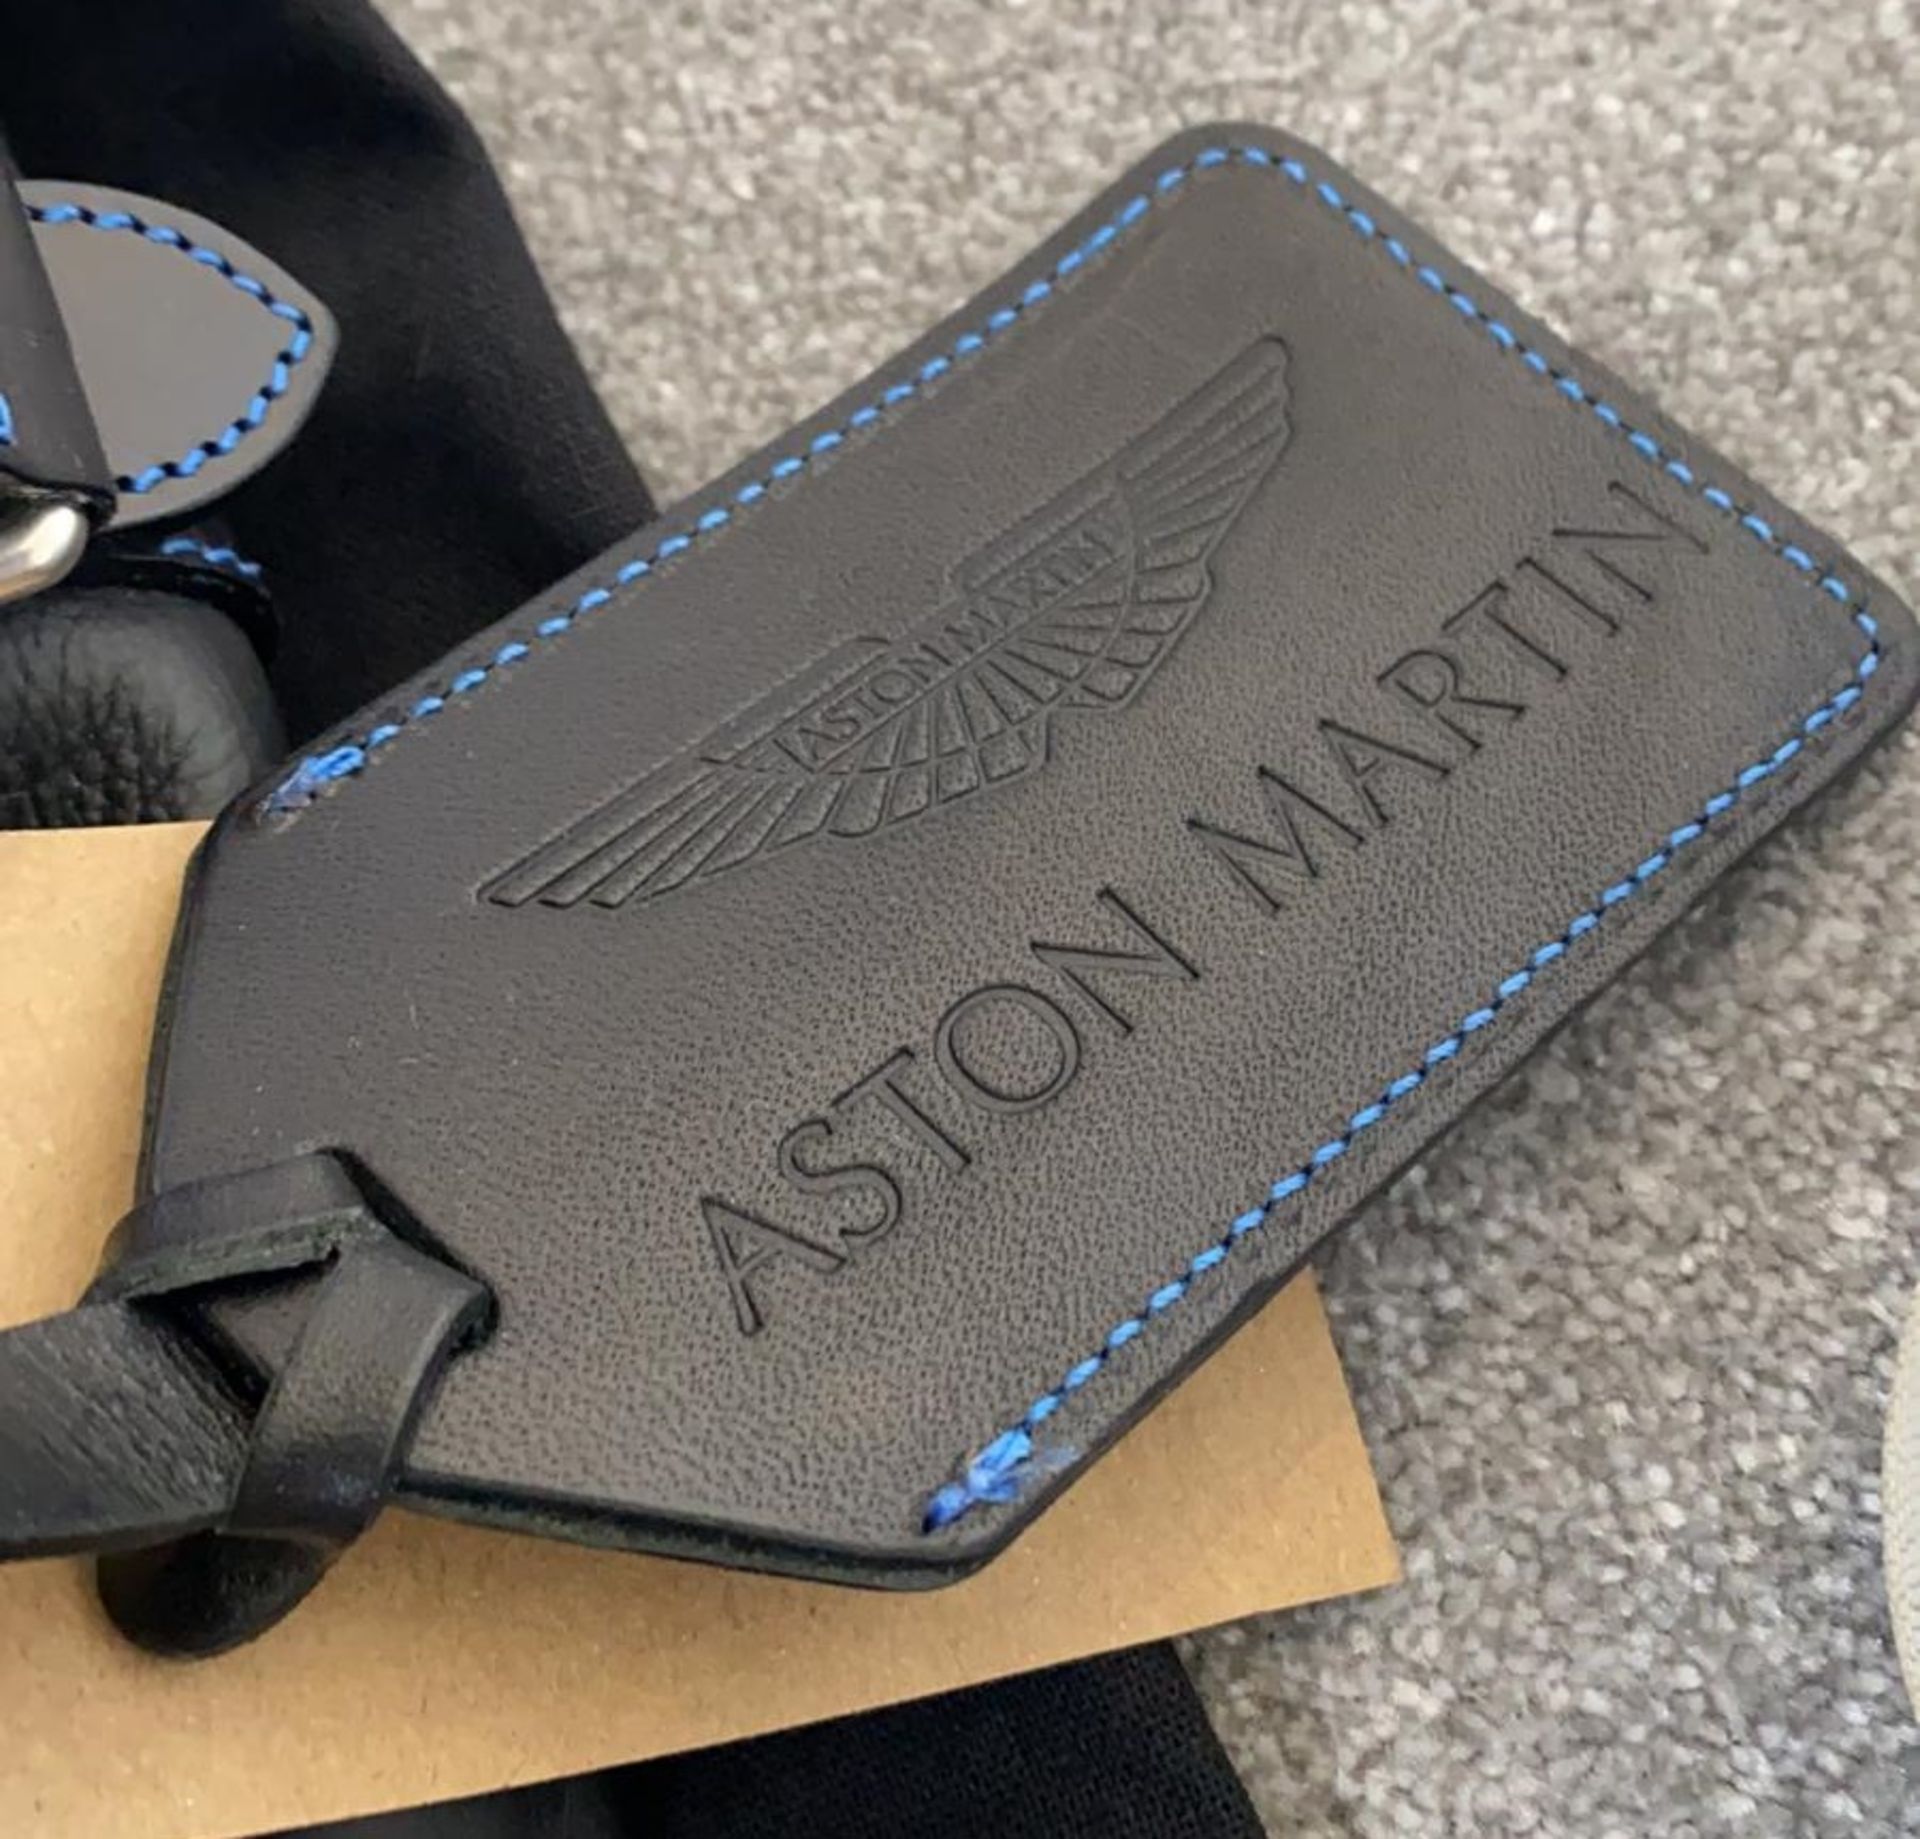 1 x Genuine Aston Martin Vantage Large Leather Holdall Luggage Case - Type 707400 - New With - Image 9 of 10